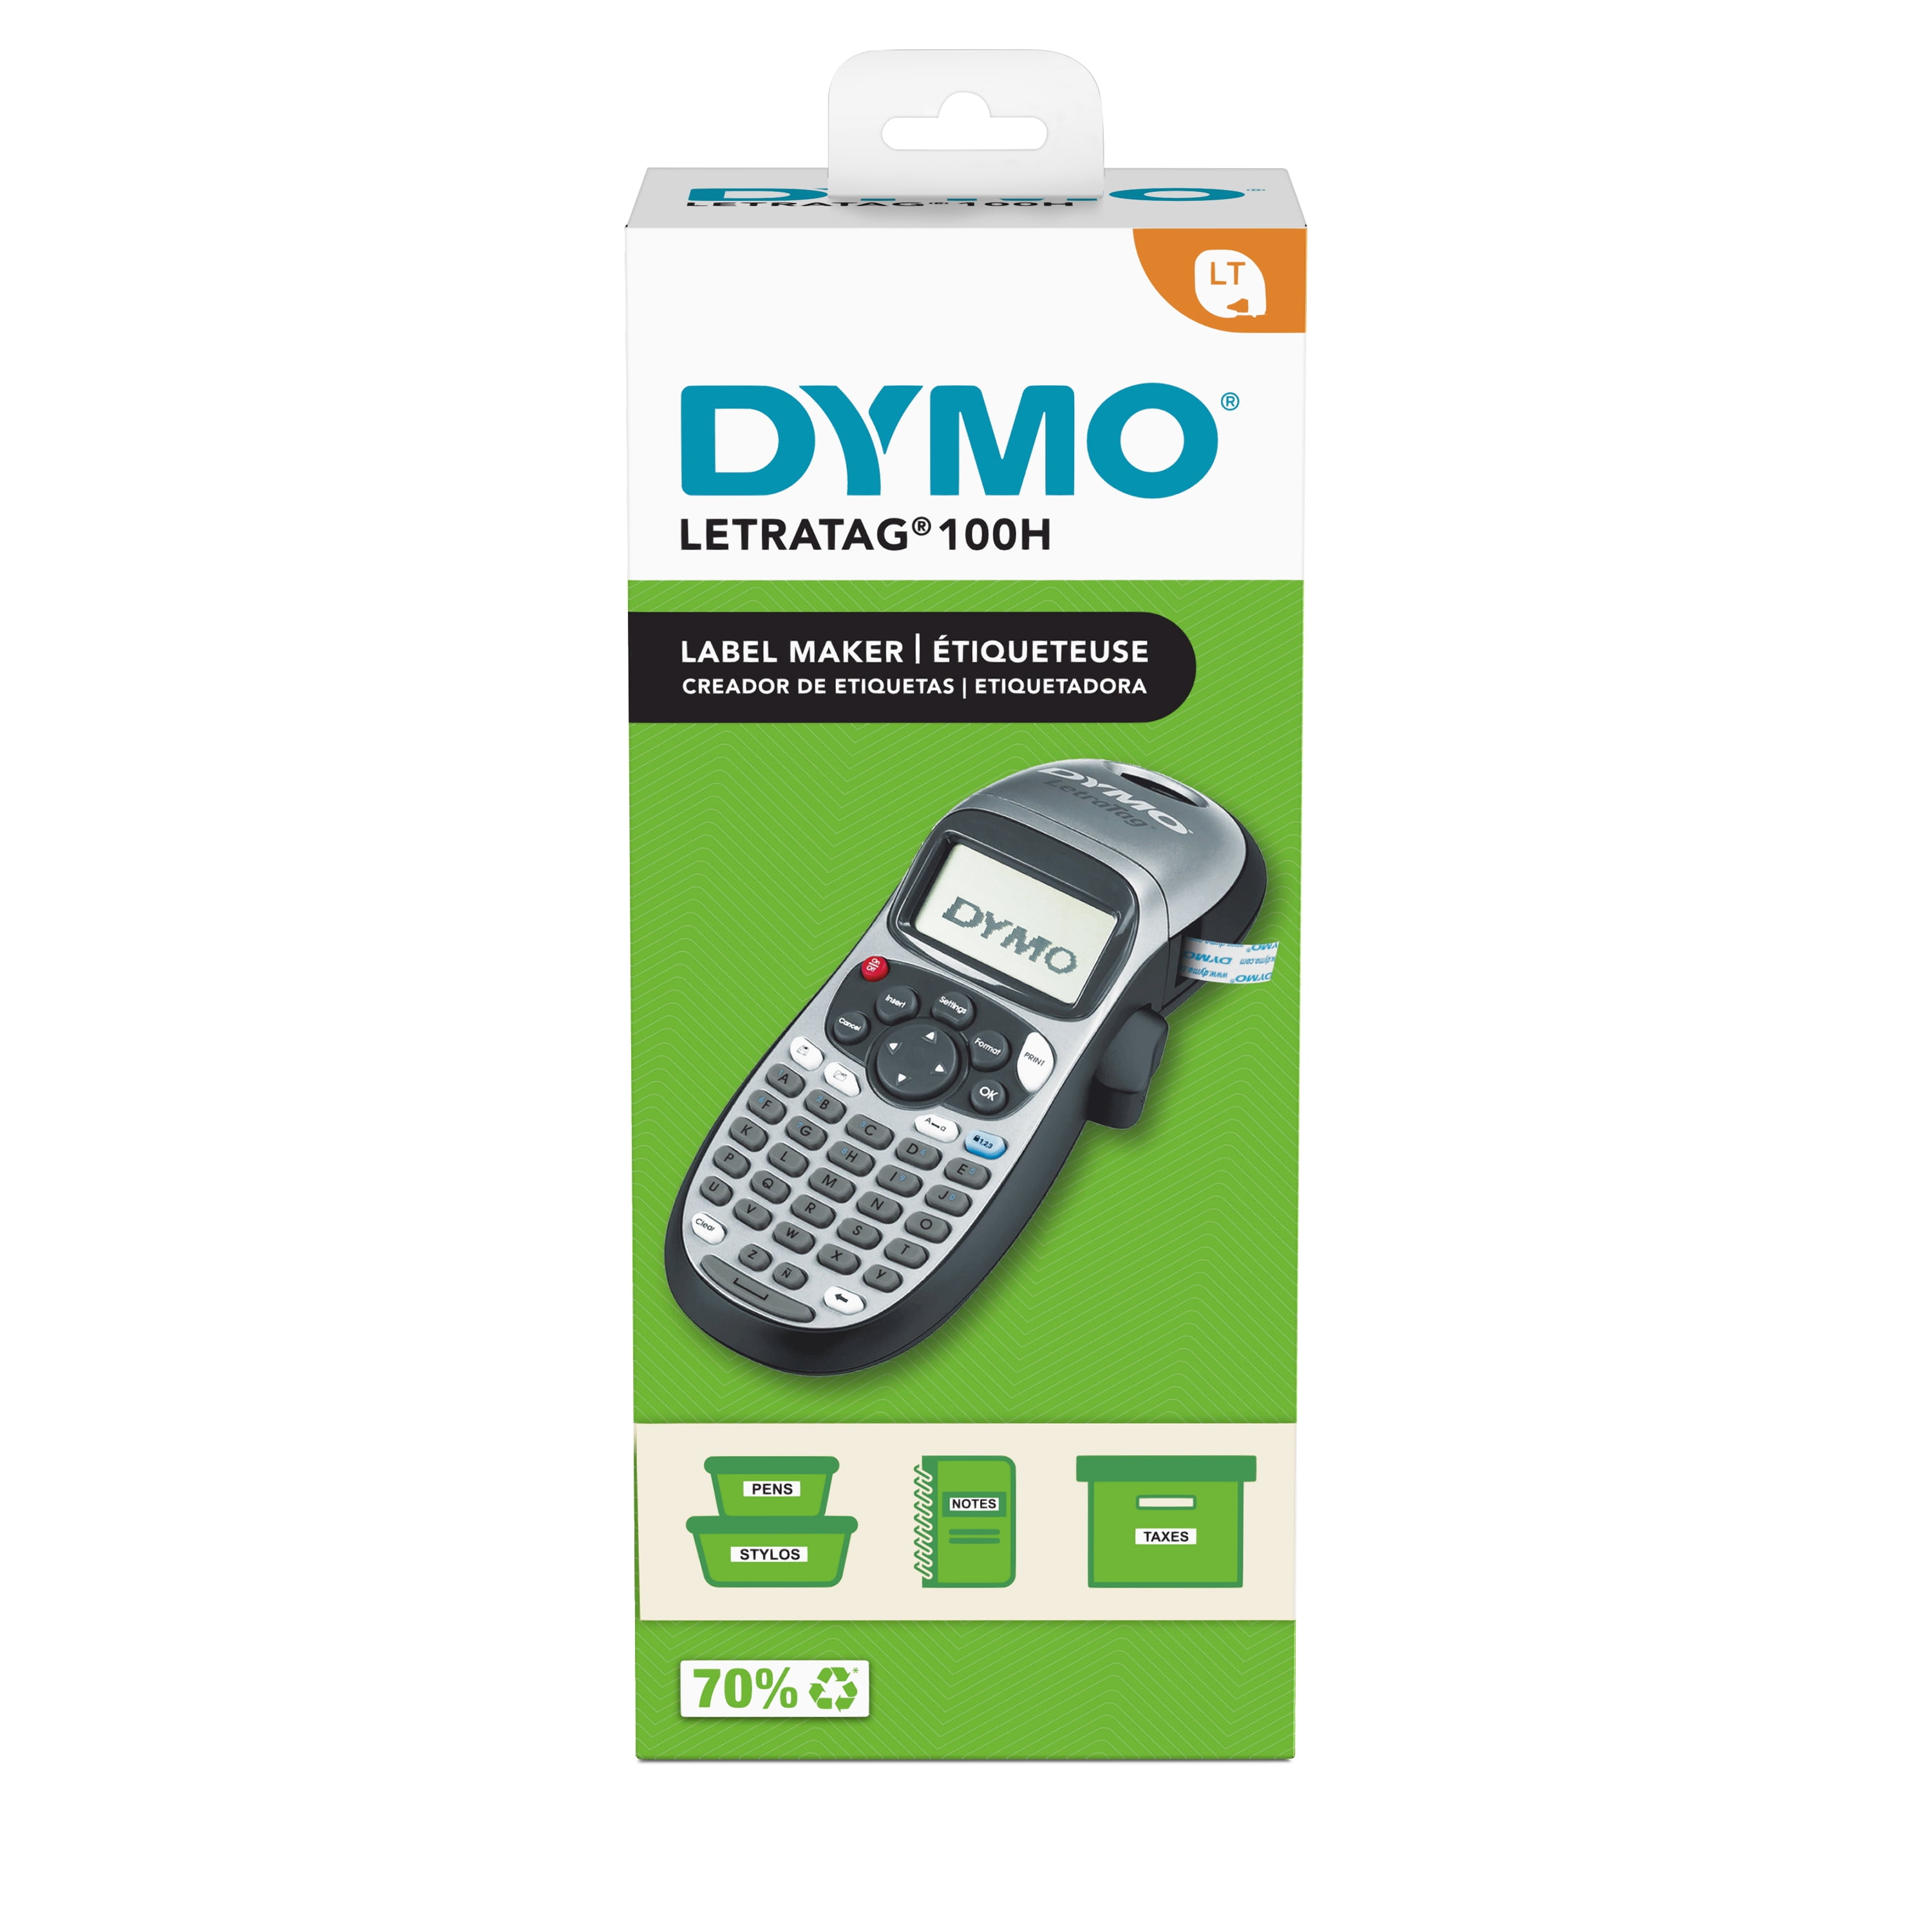 Dymo LetraTag LT-100H Portable Label Maker, 1 ct - Kroger